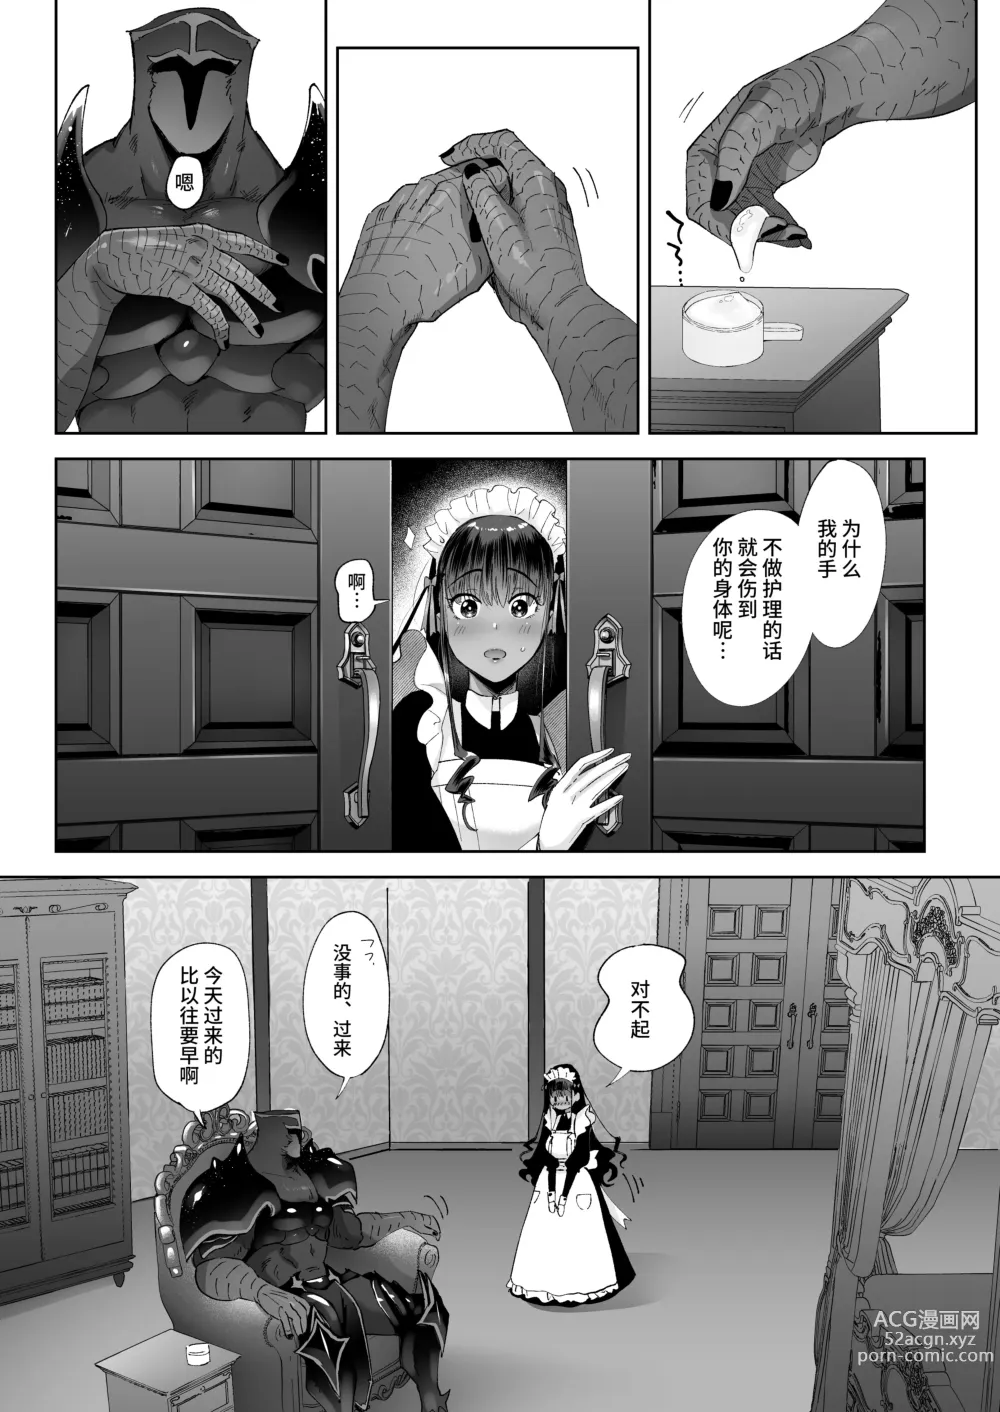 Page 7 of manga 亲吻绝对不行哦?